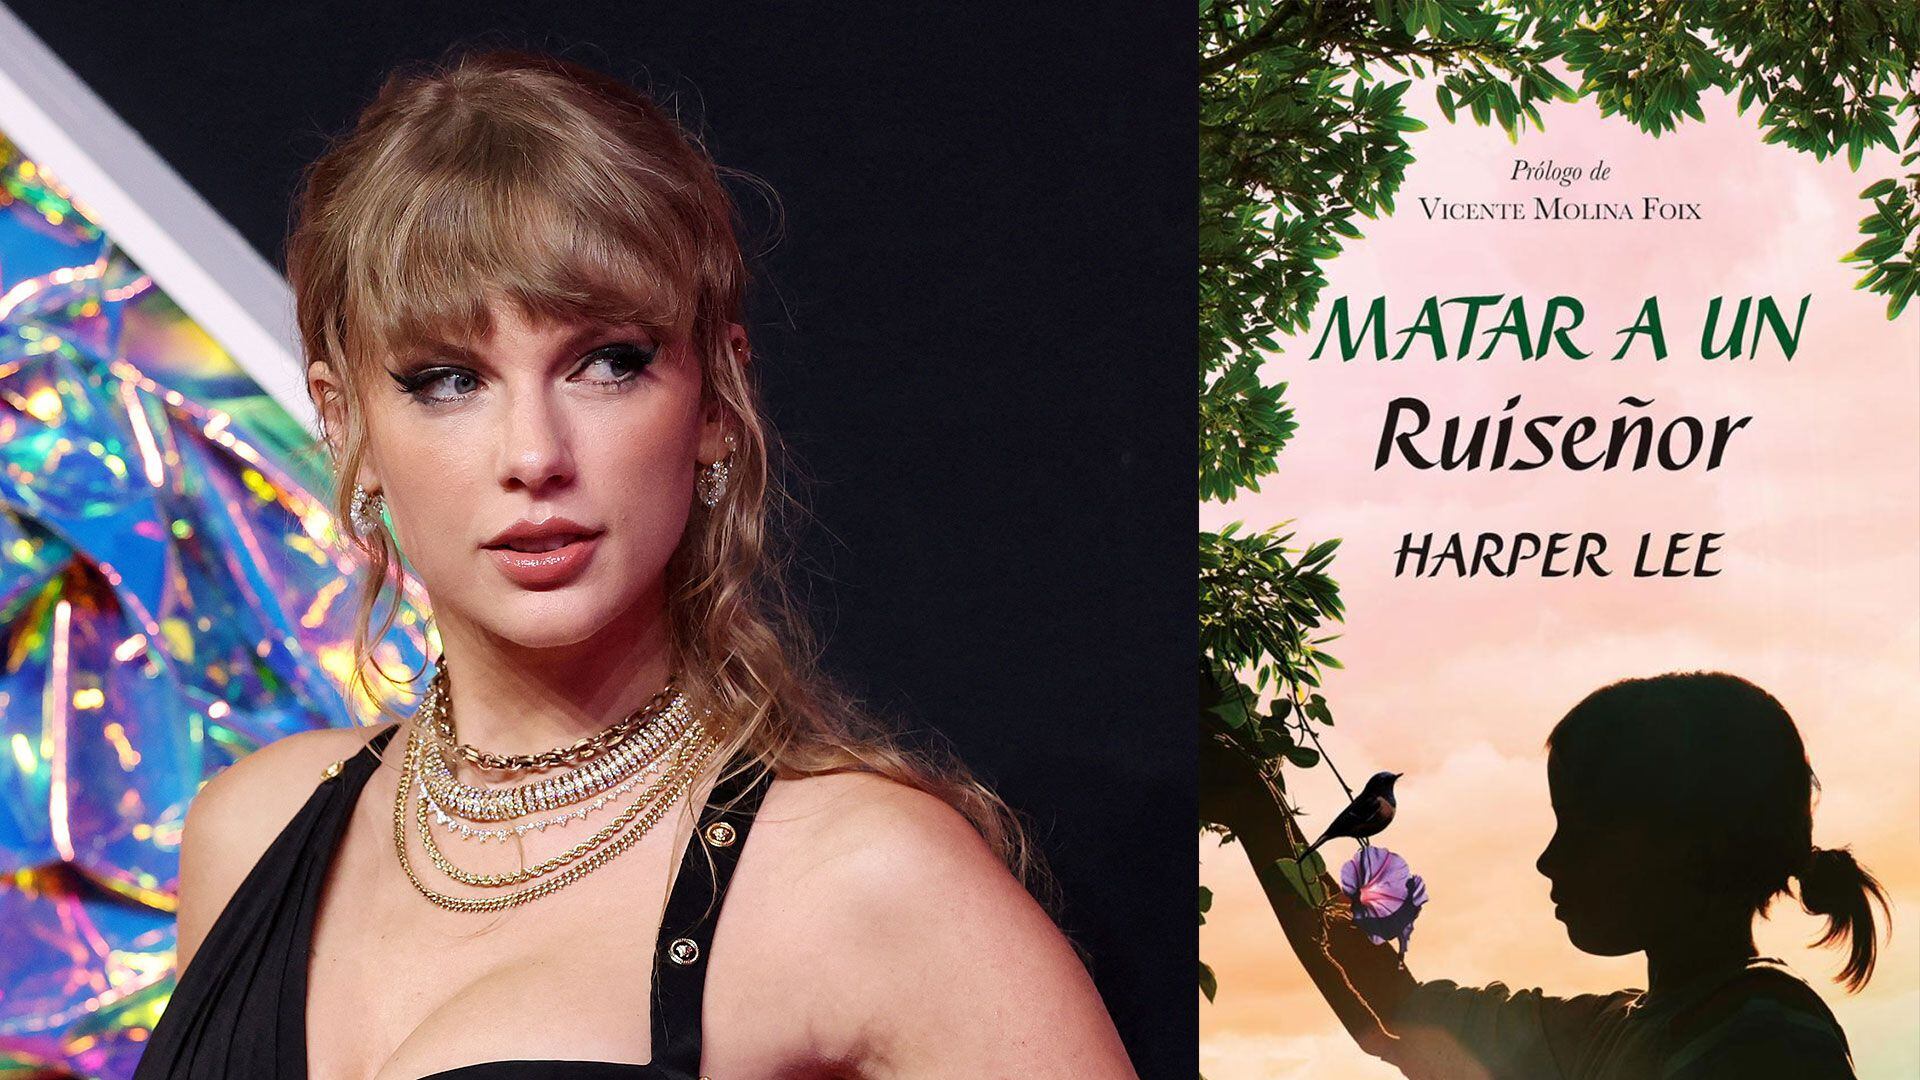 Taylor Swift - “Matar a un ruiseñor” (Harper Lee)